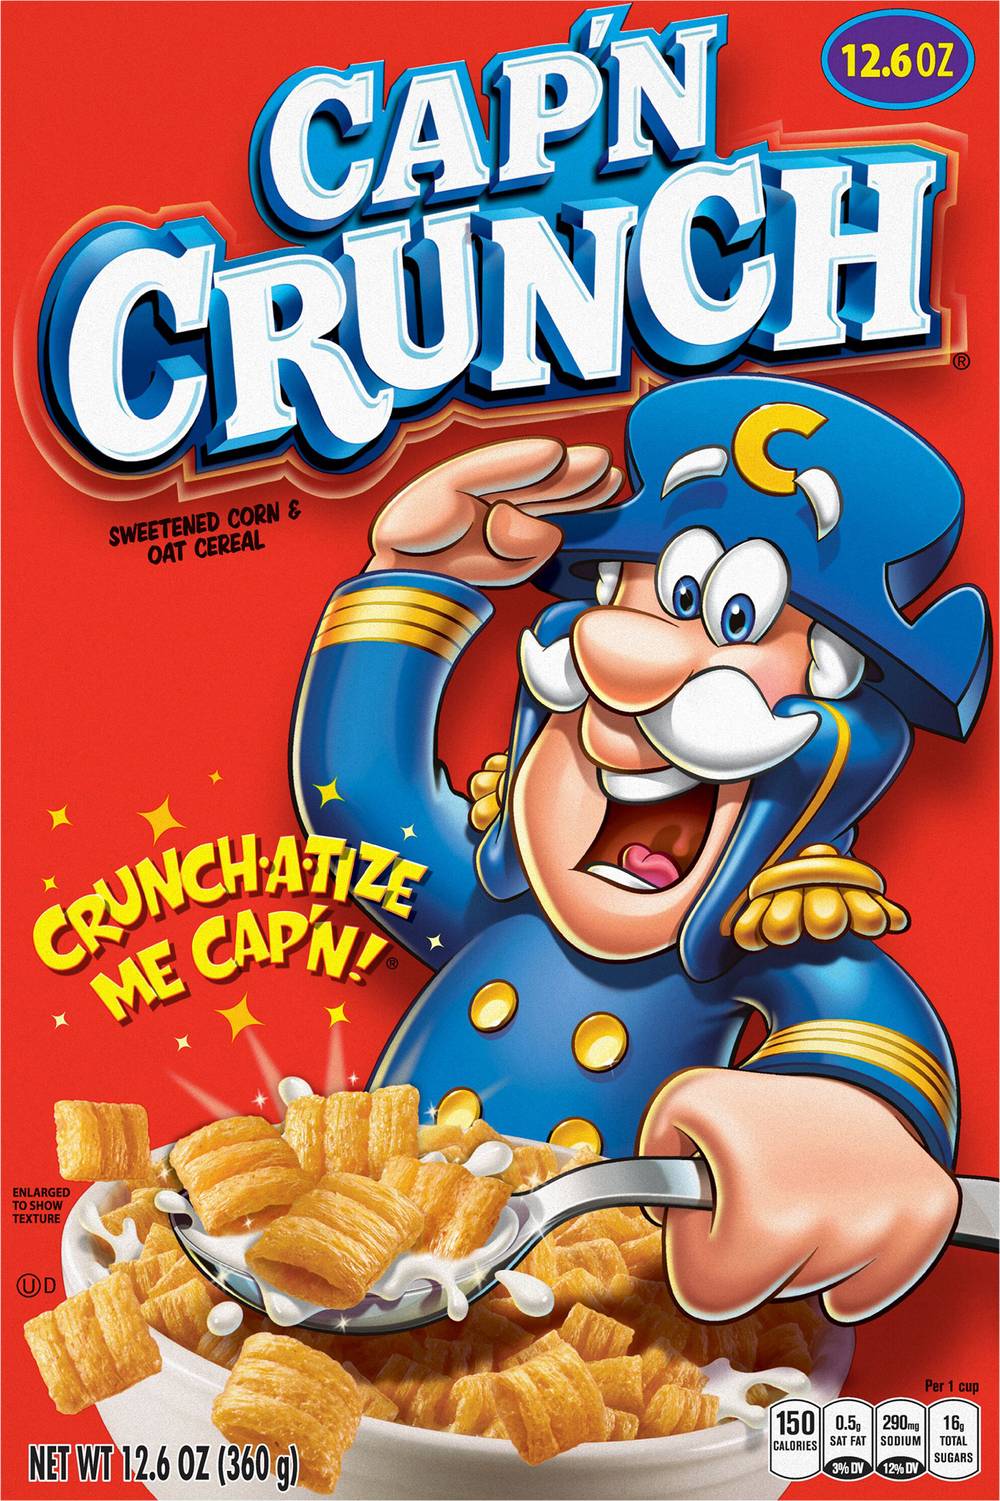 Cap'n Crunch Sweetened Corn & Oat Cereal